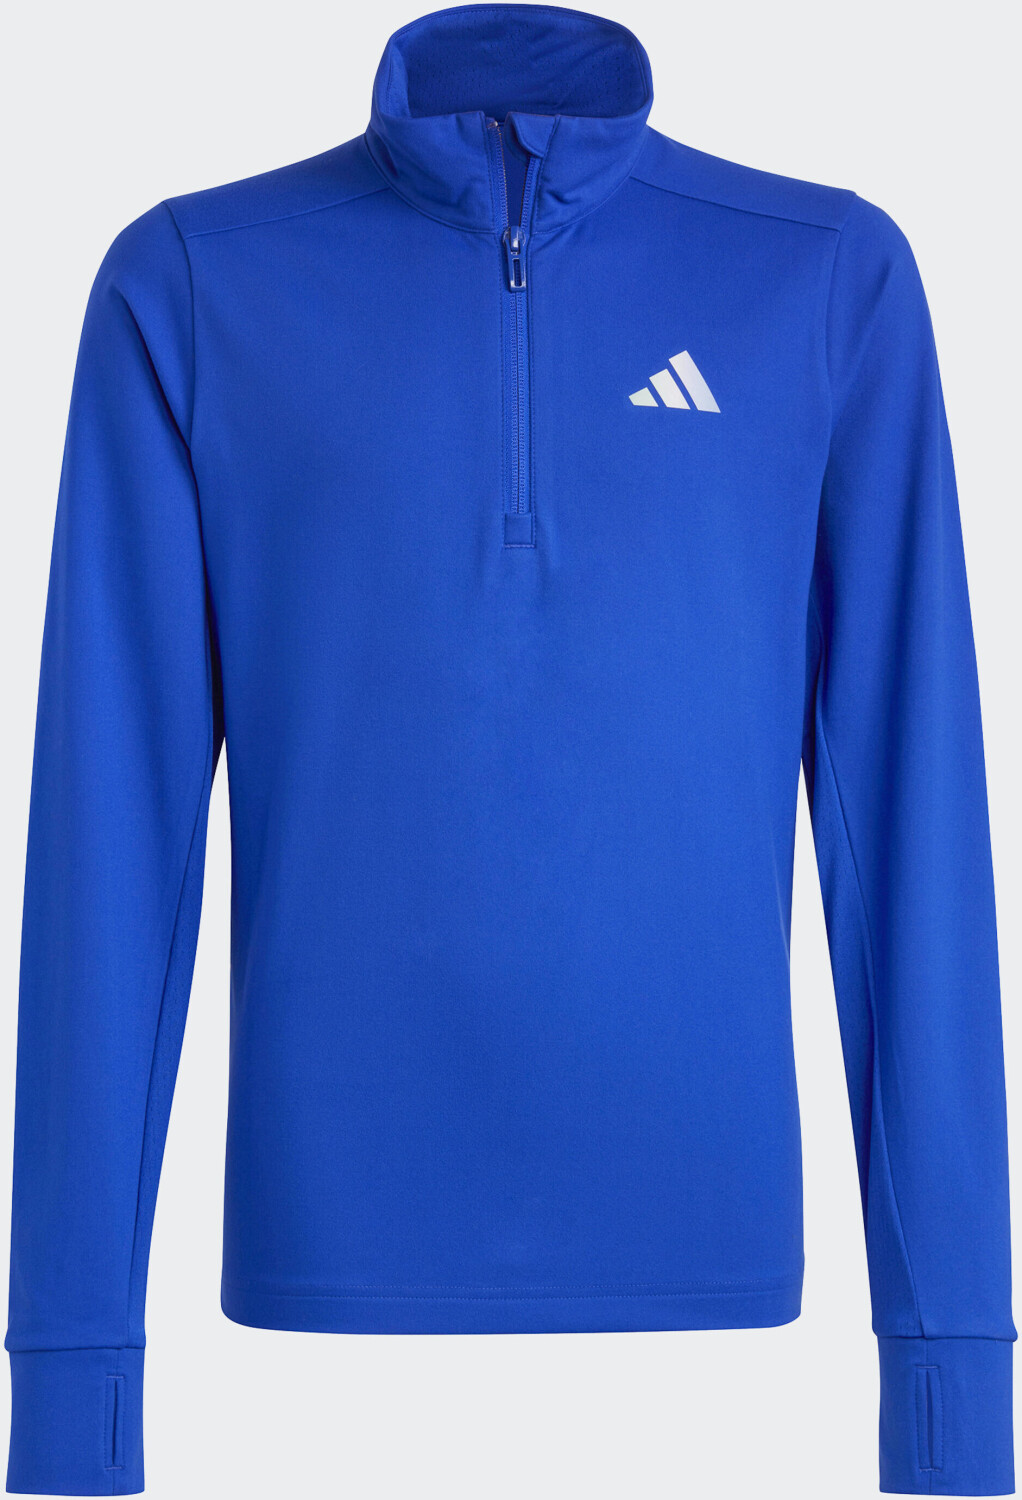 AEROREADY Preisvergleich blue/reflective Longsleeve Half-Zip ab € lucid | 20,99 bei Adidas silver